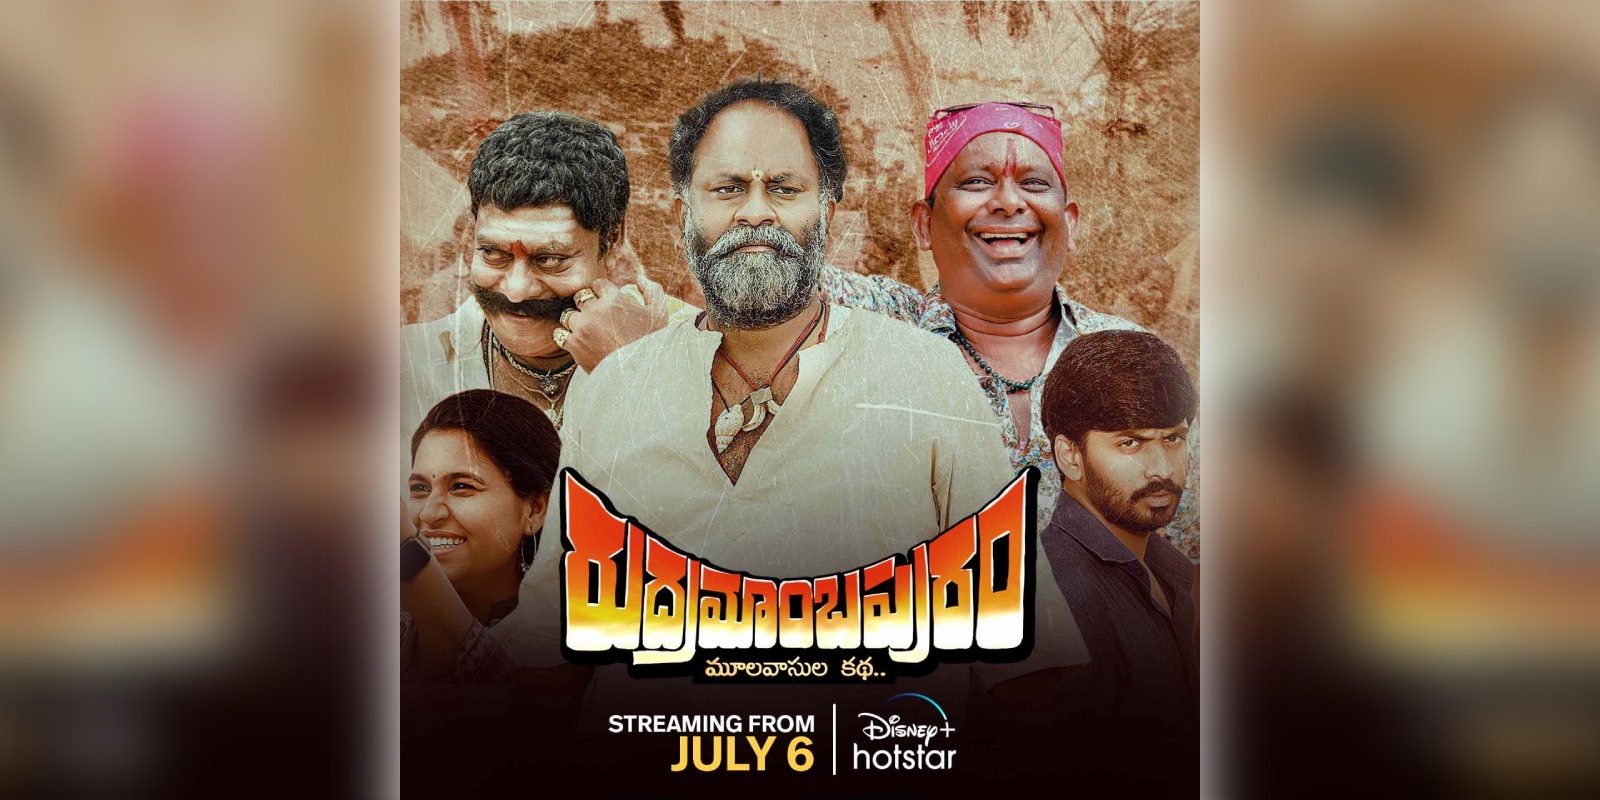 rudramambapuram movie review in telugu